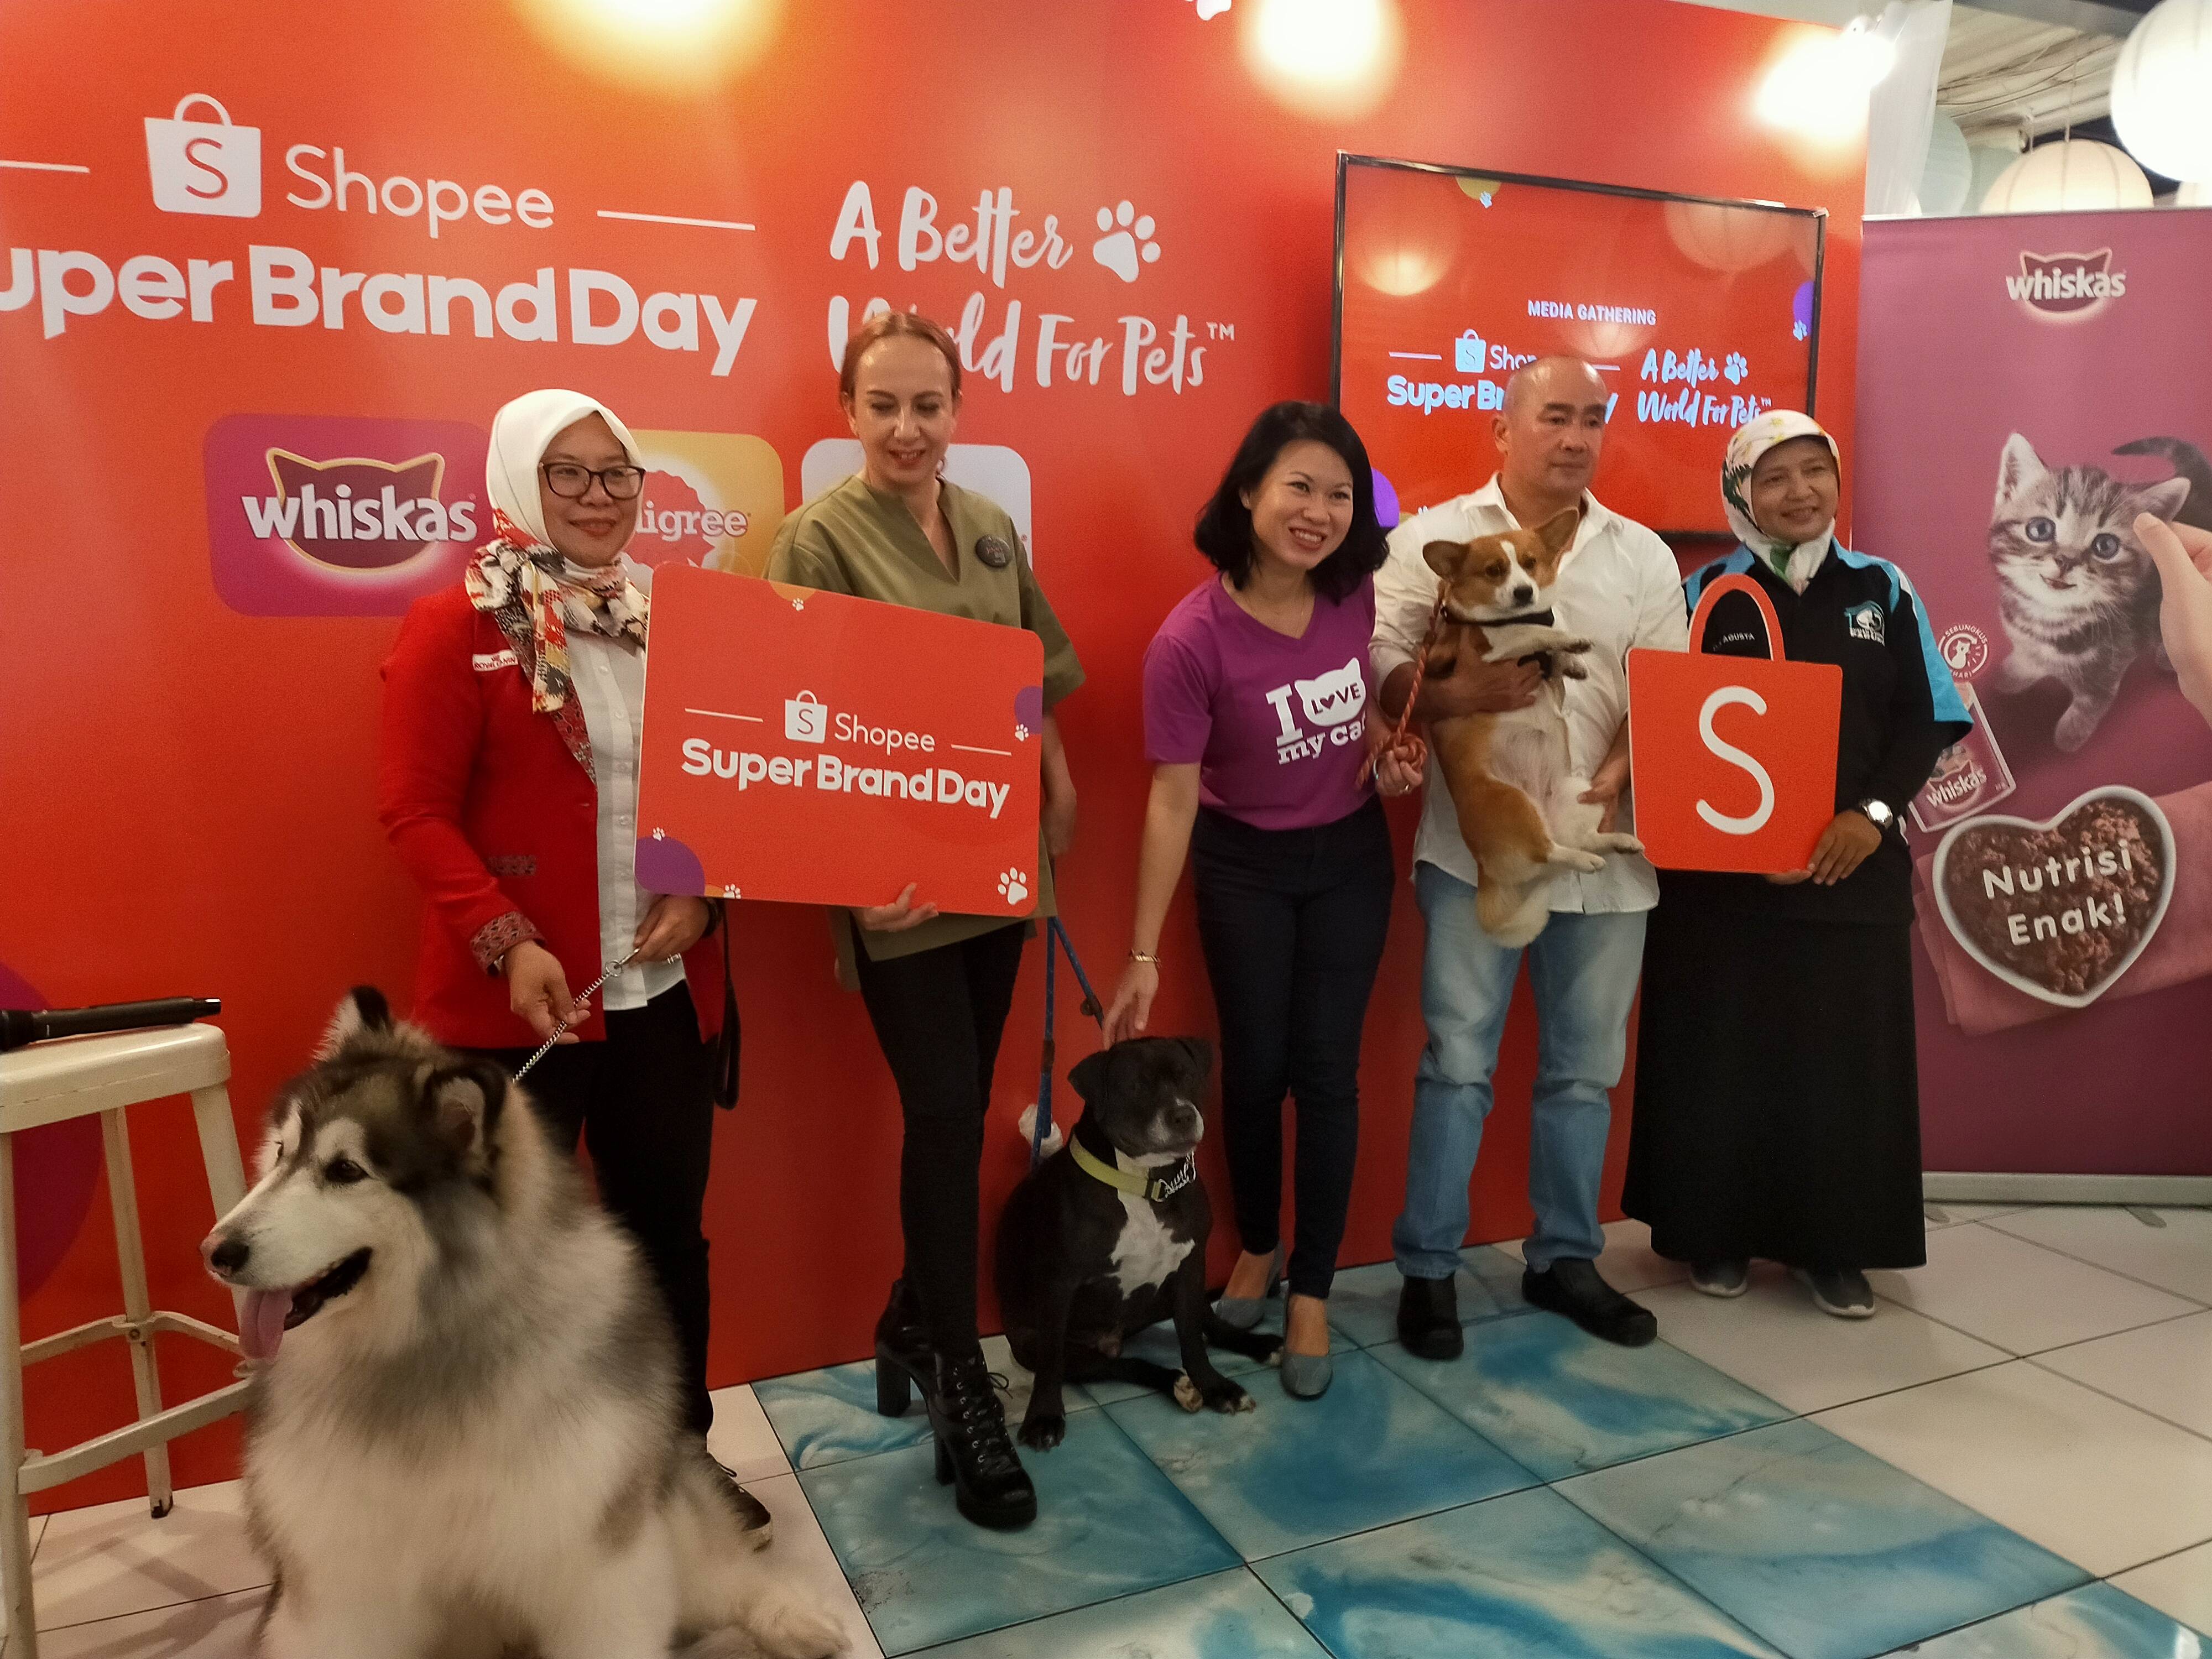 Shopee Super BrandDay 'A Better World for Pets' pertama di Indonesia